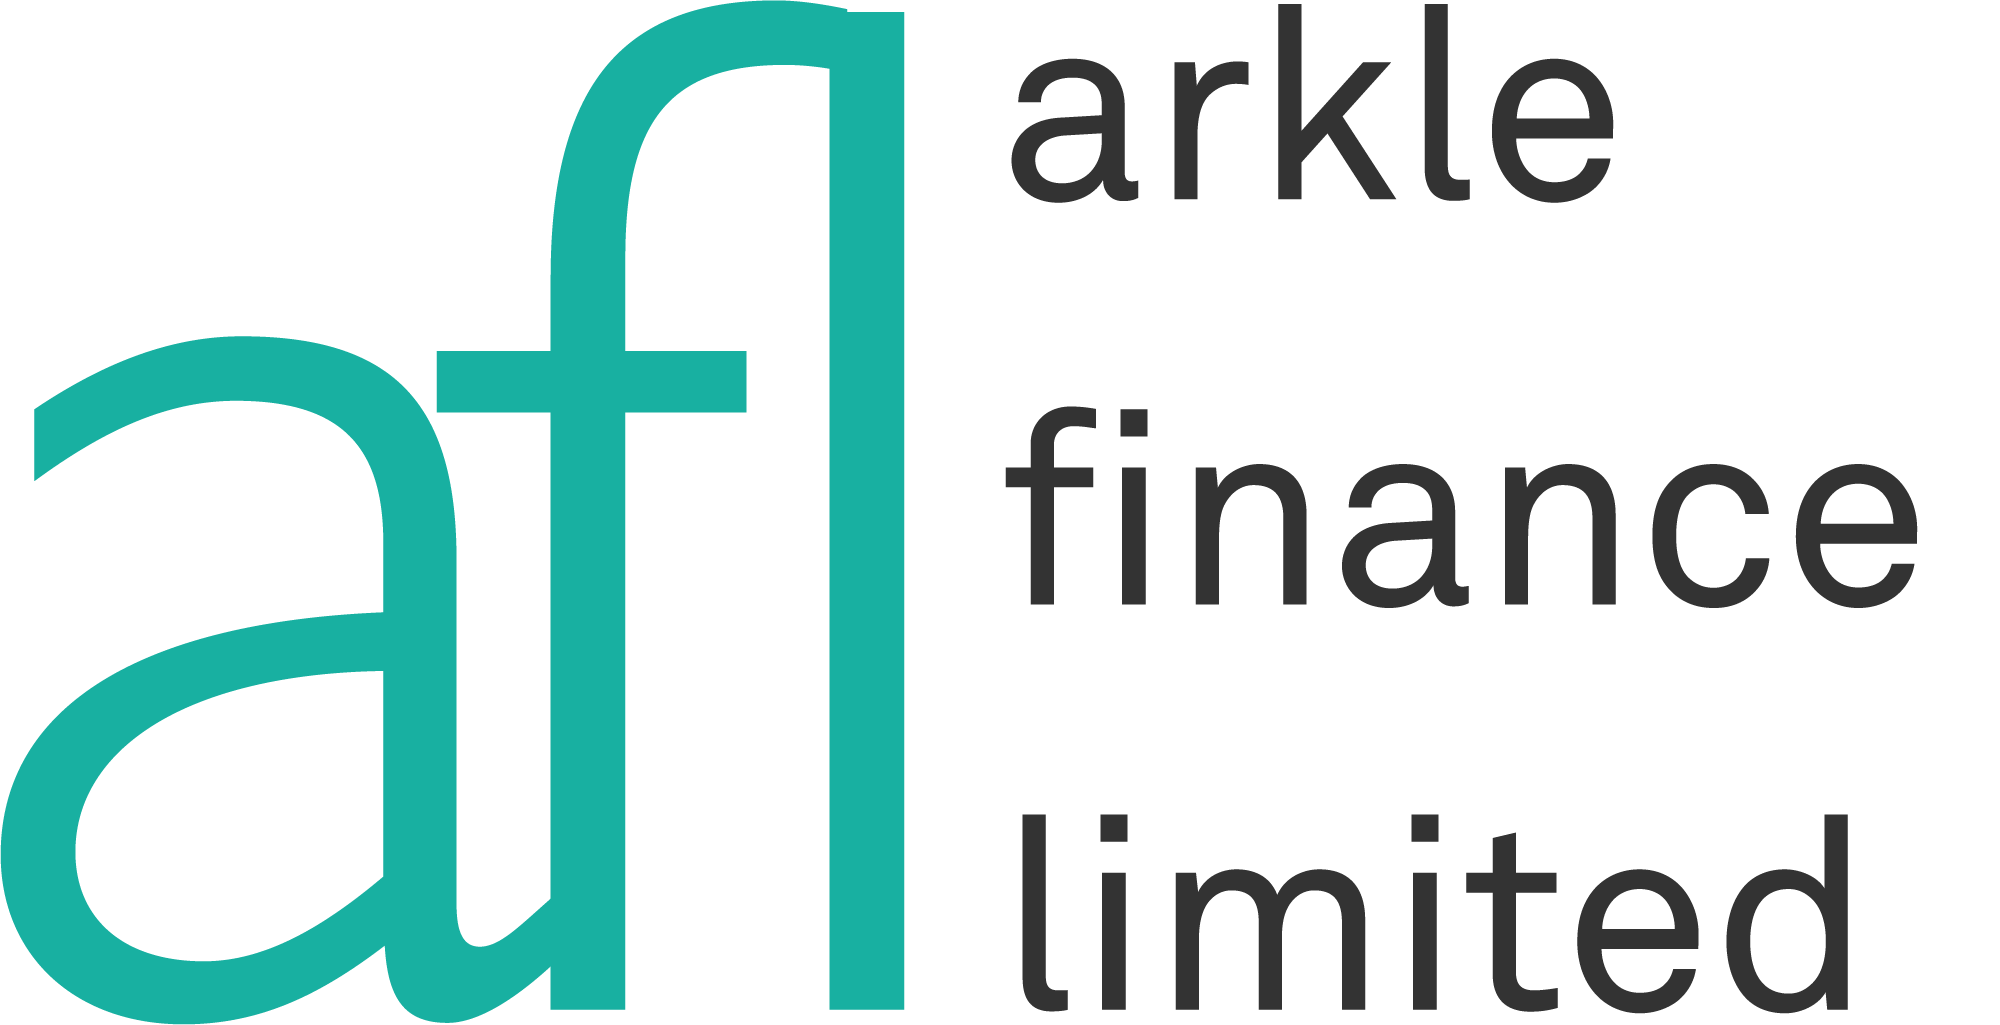 Arkle Finance Ltd no background.png